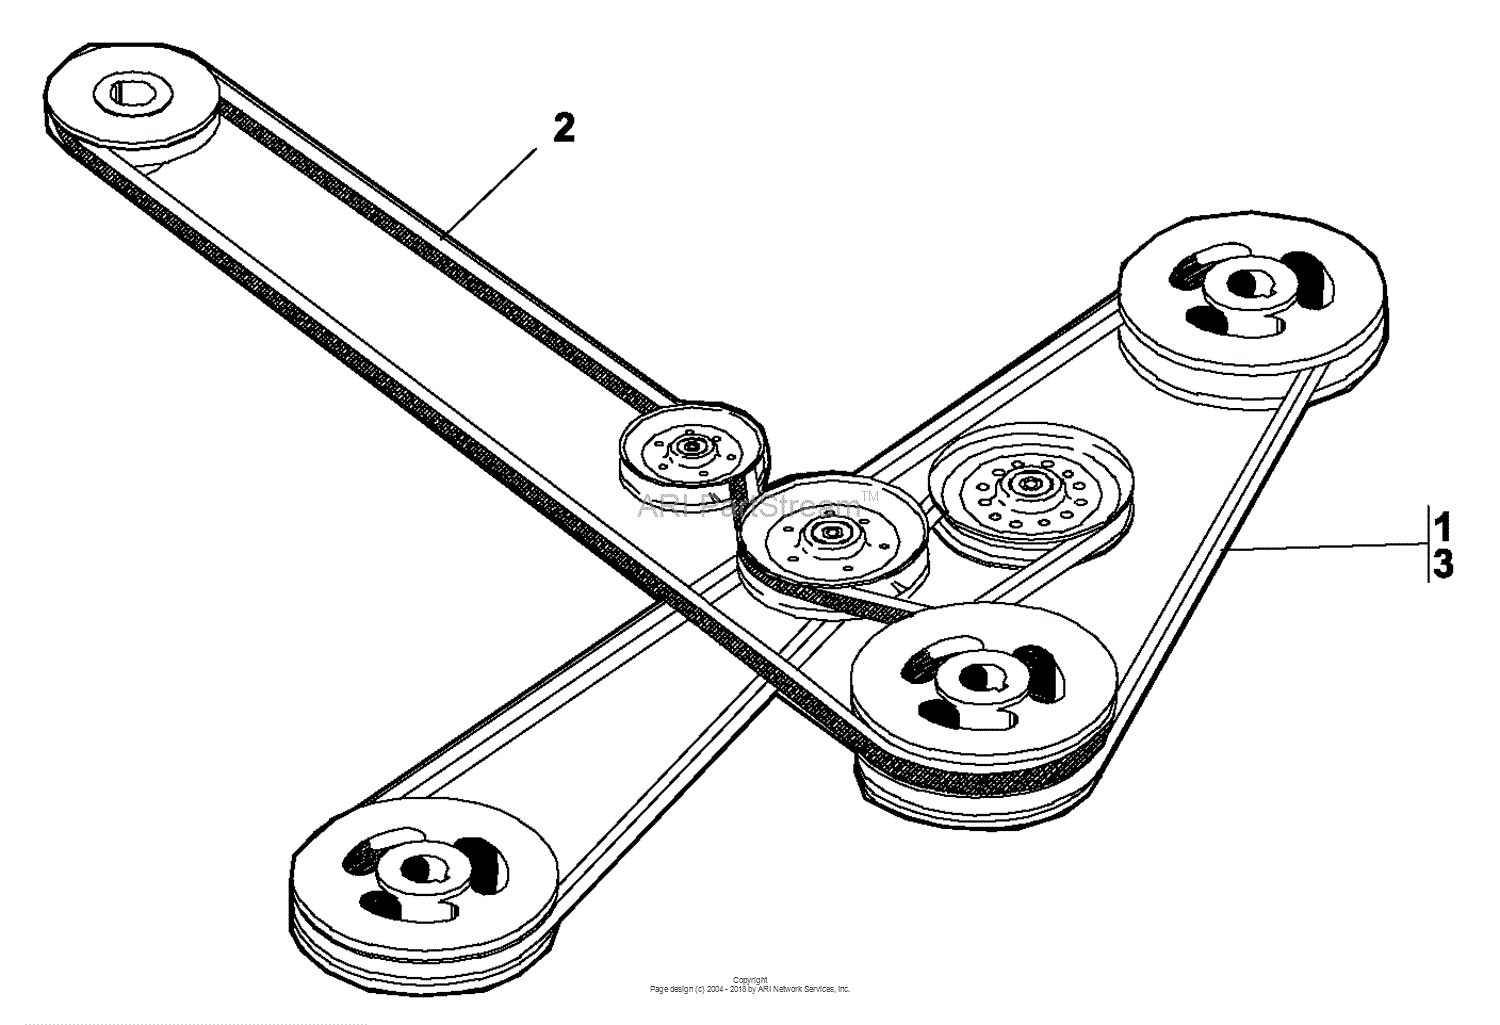 dixie chopper deck belt diagram